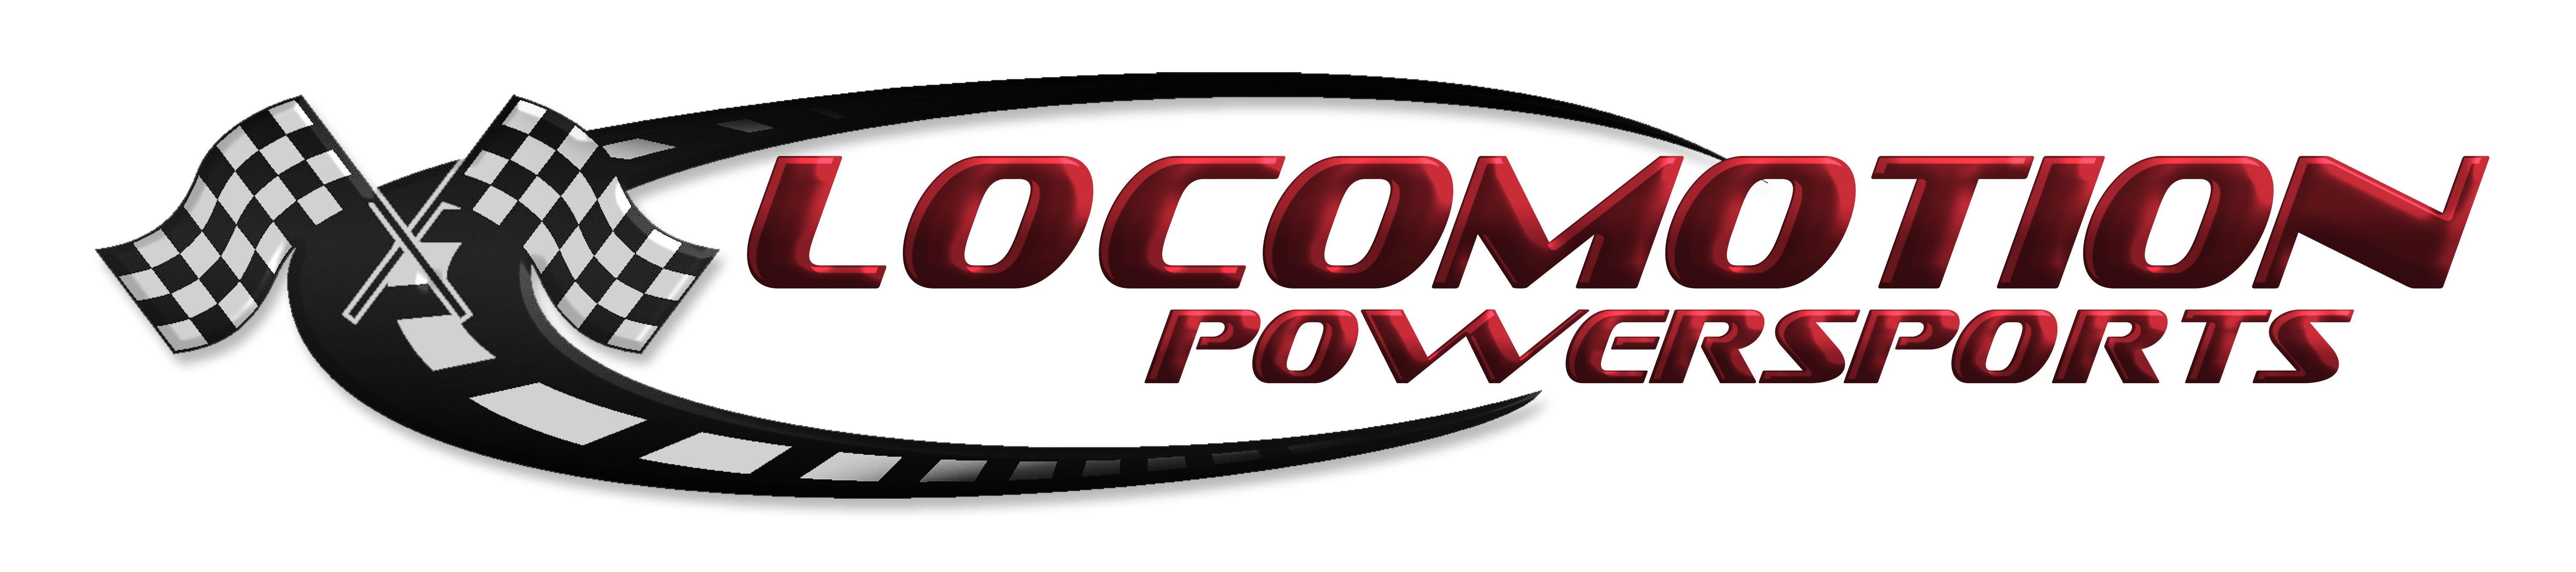 Locomotion Logo - LOCOMOTION POWERSPORTS | LinkedIn